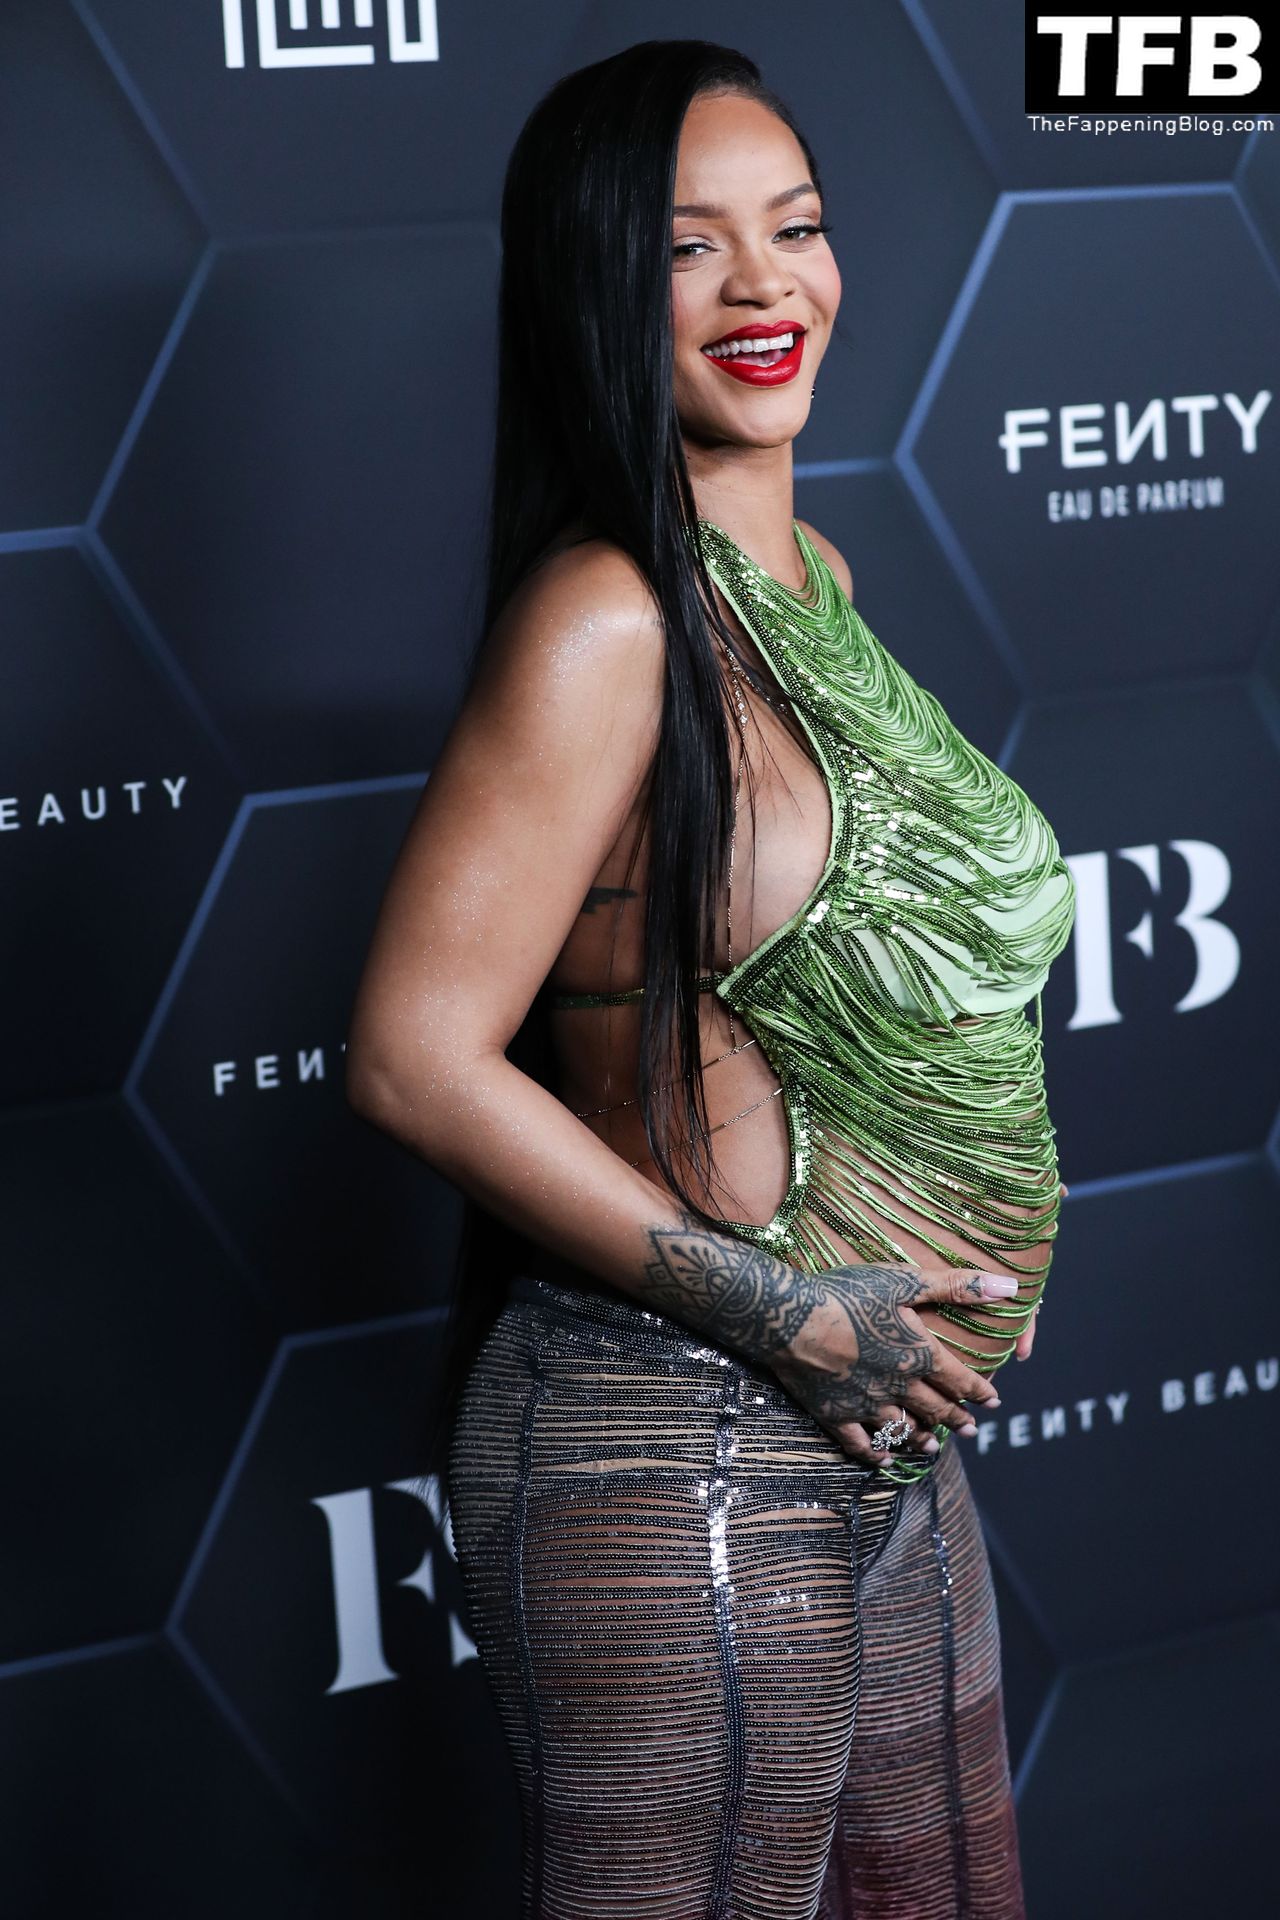 Rihanna-Sexy-The-Fappening-Blog-89.jpg